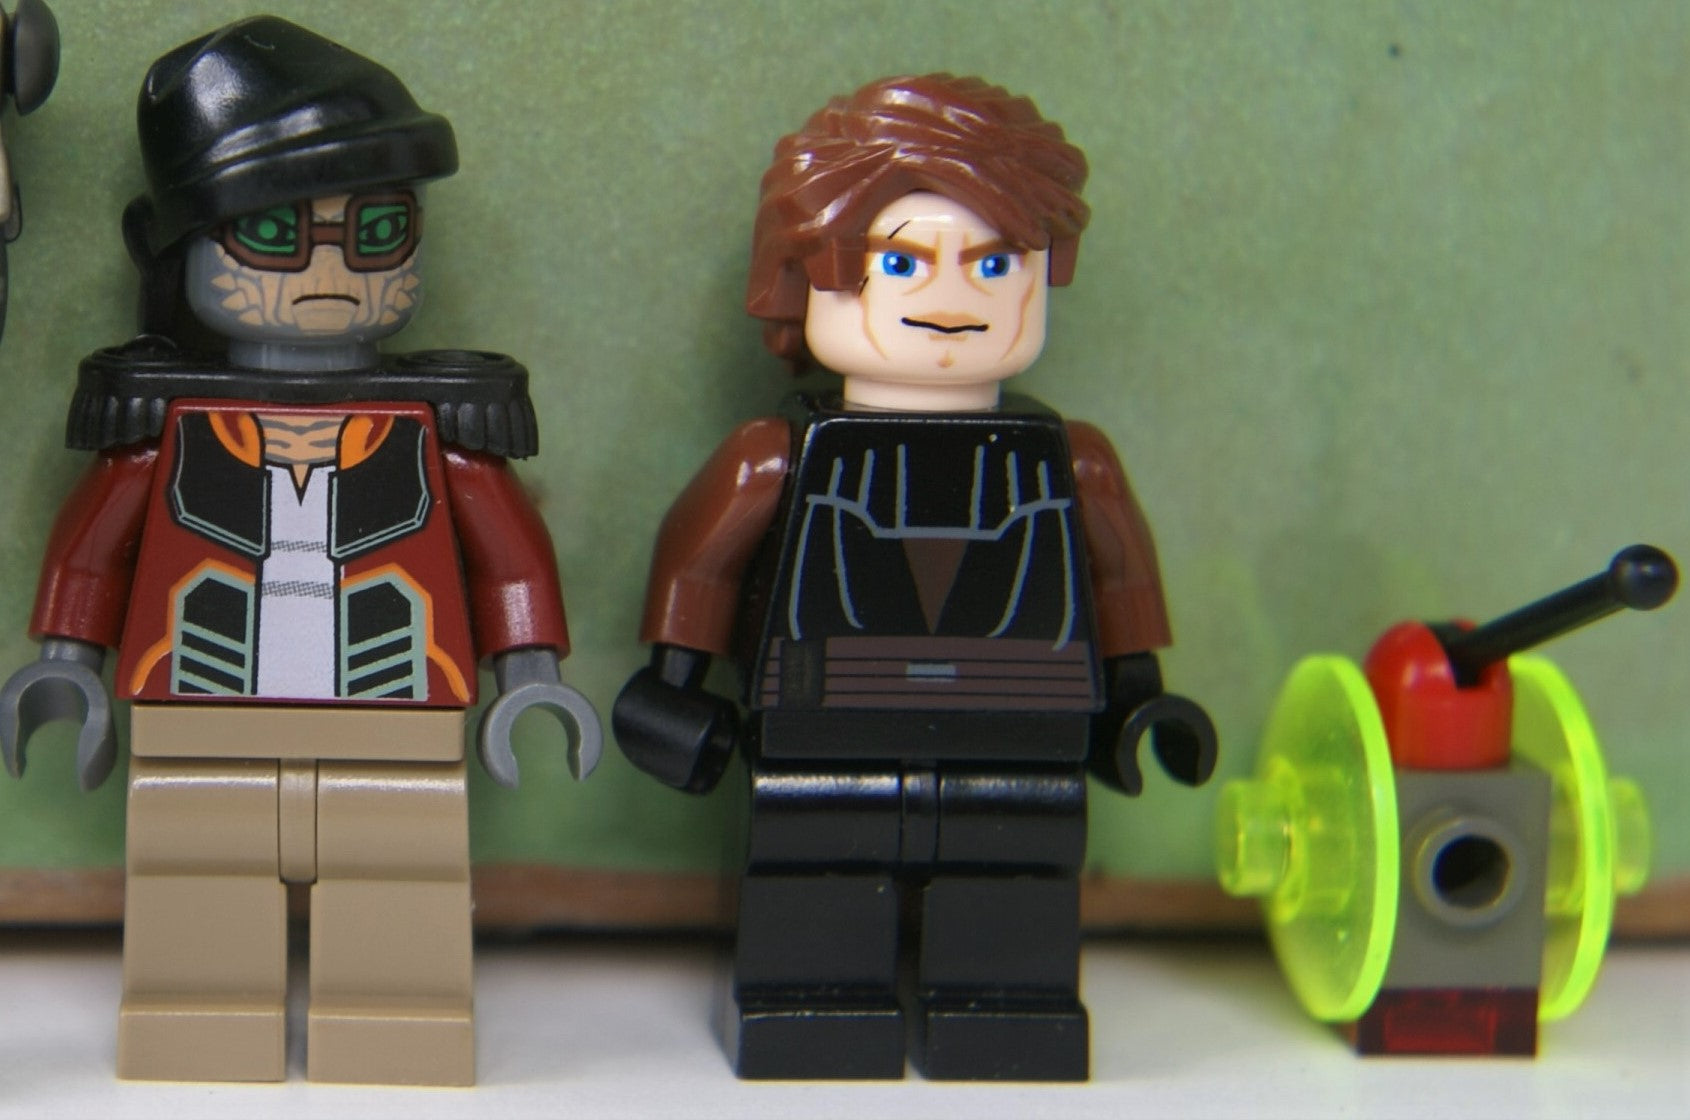 Scalpers gouge Lego fans desperate for freebie Skywalker Saga minifigure